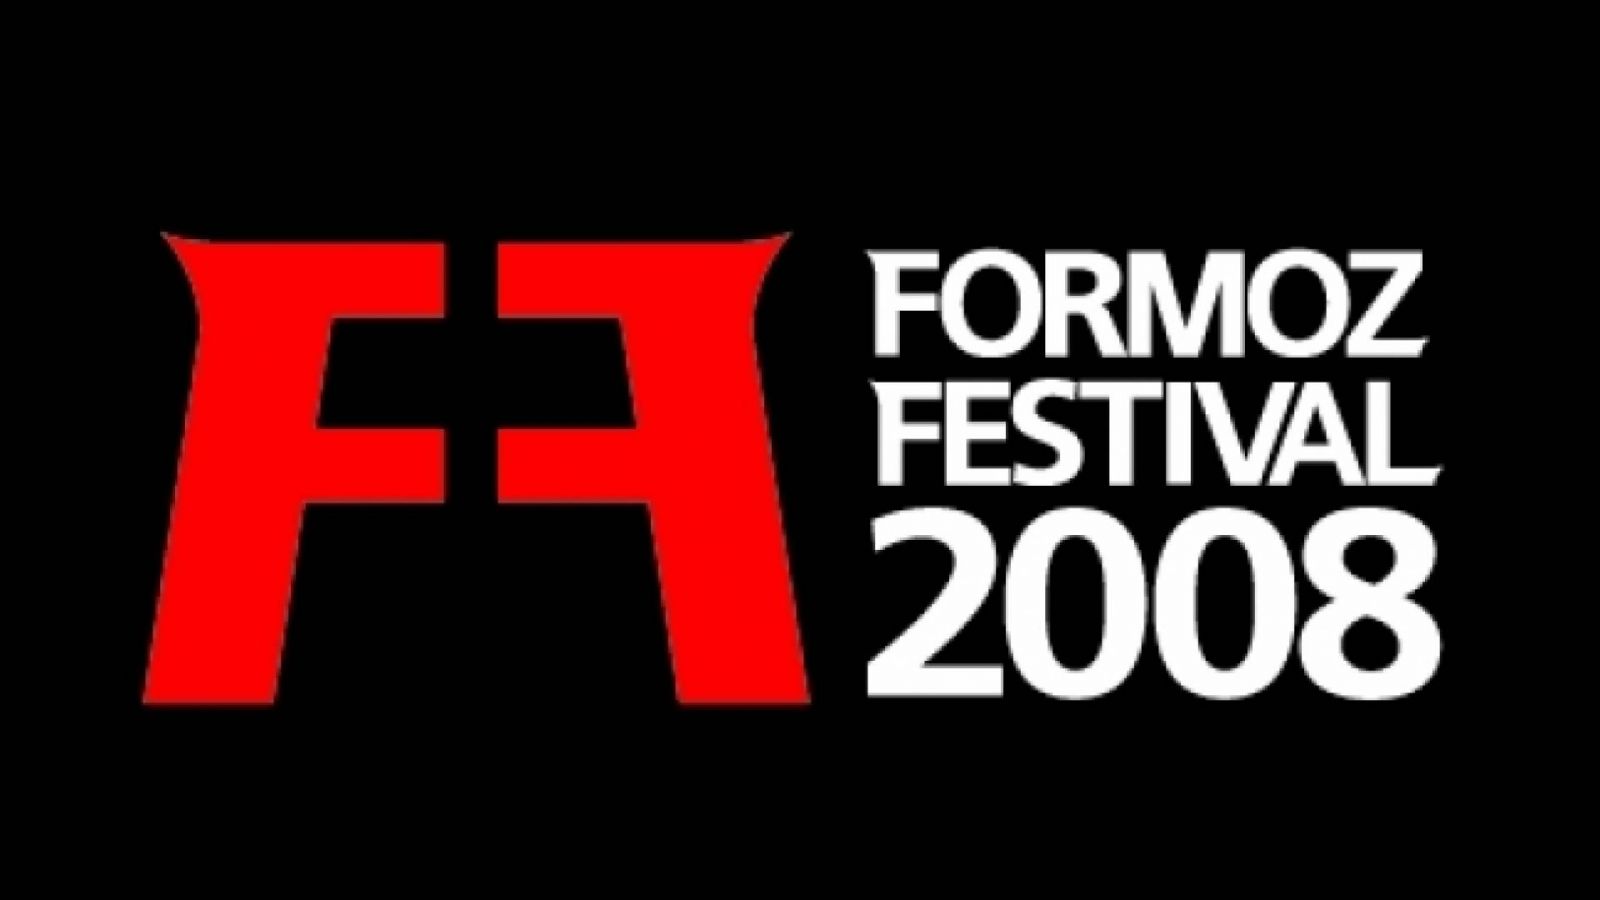 FORMOZ Festival - Part 2 © Formoz Festival